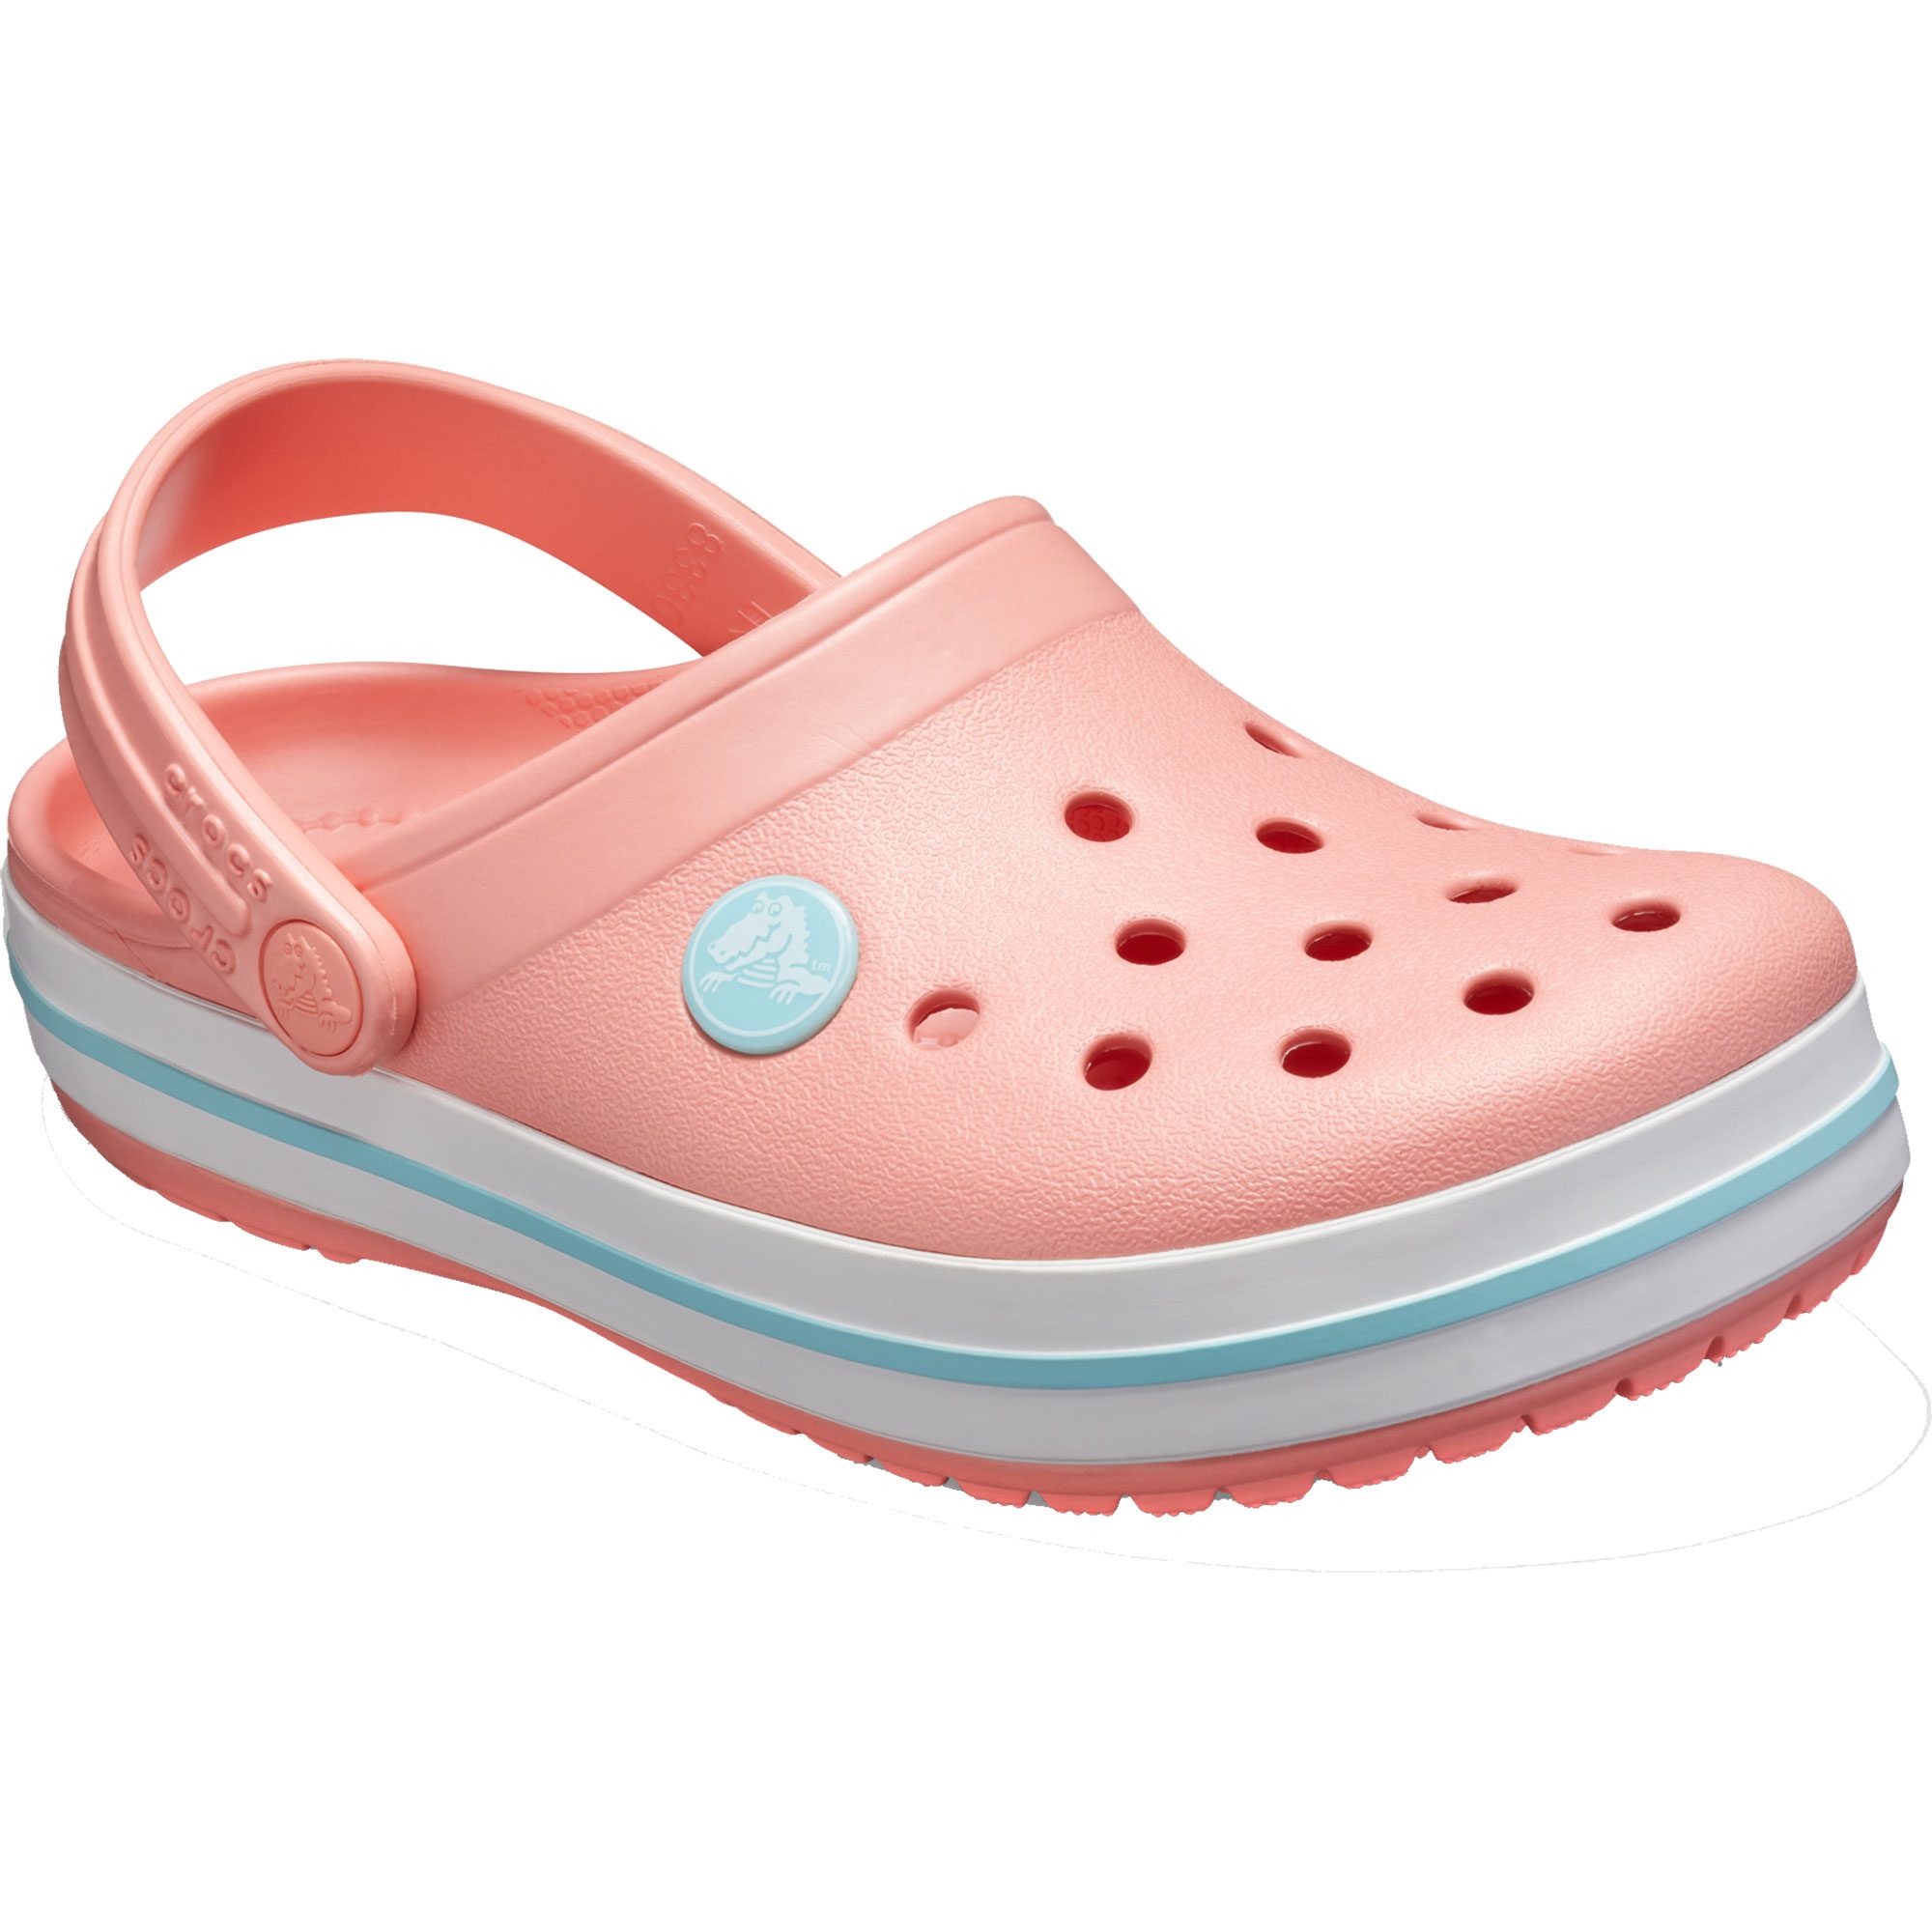 Crocs - Crocband Sandals Kids melon at Sport Bittl Shop